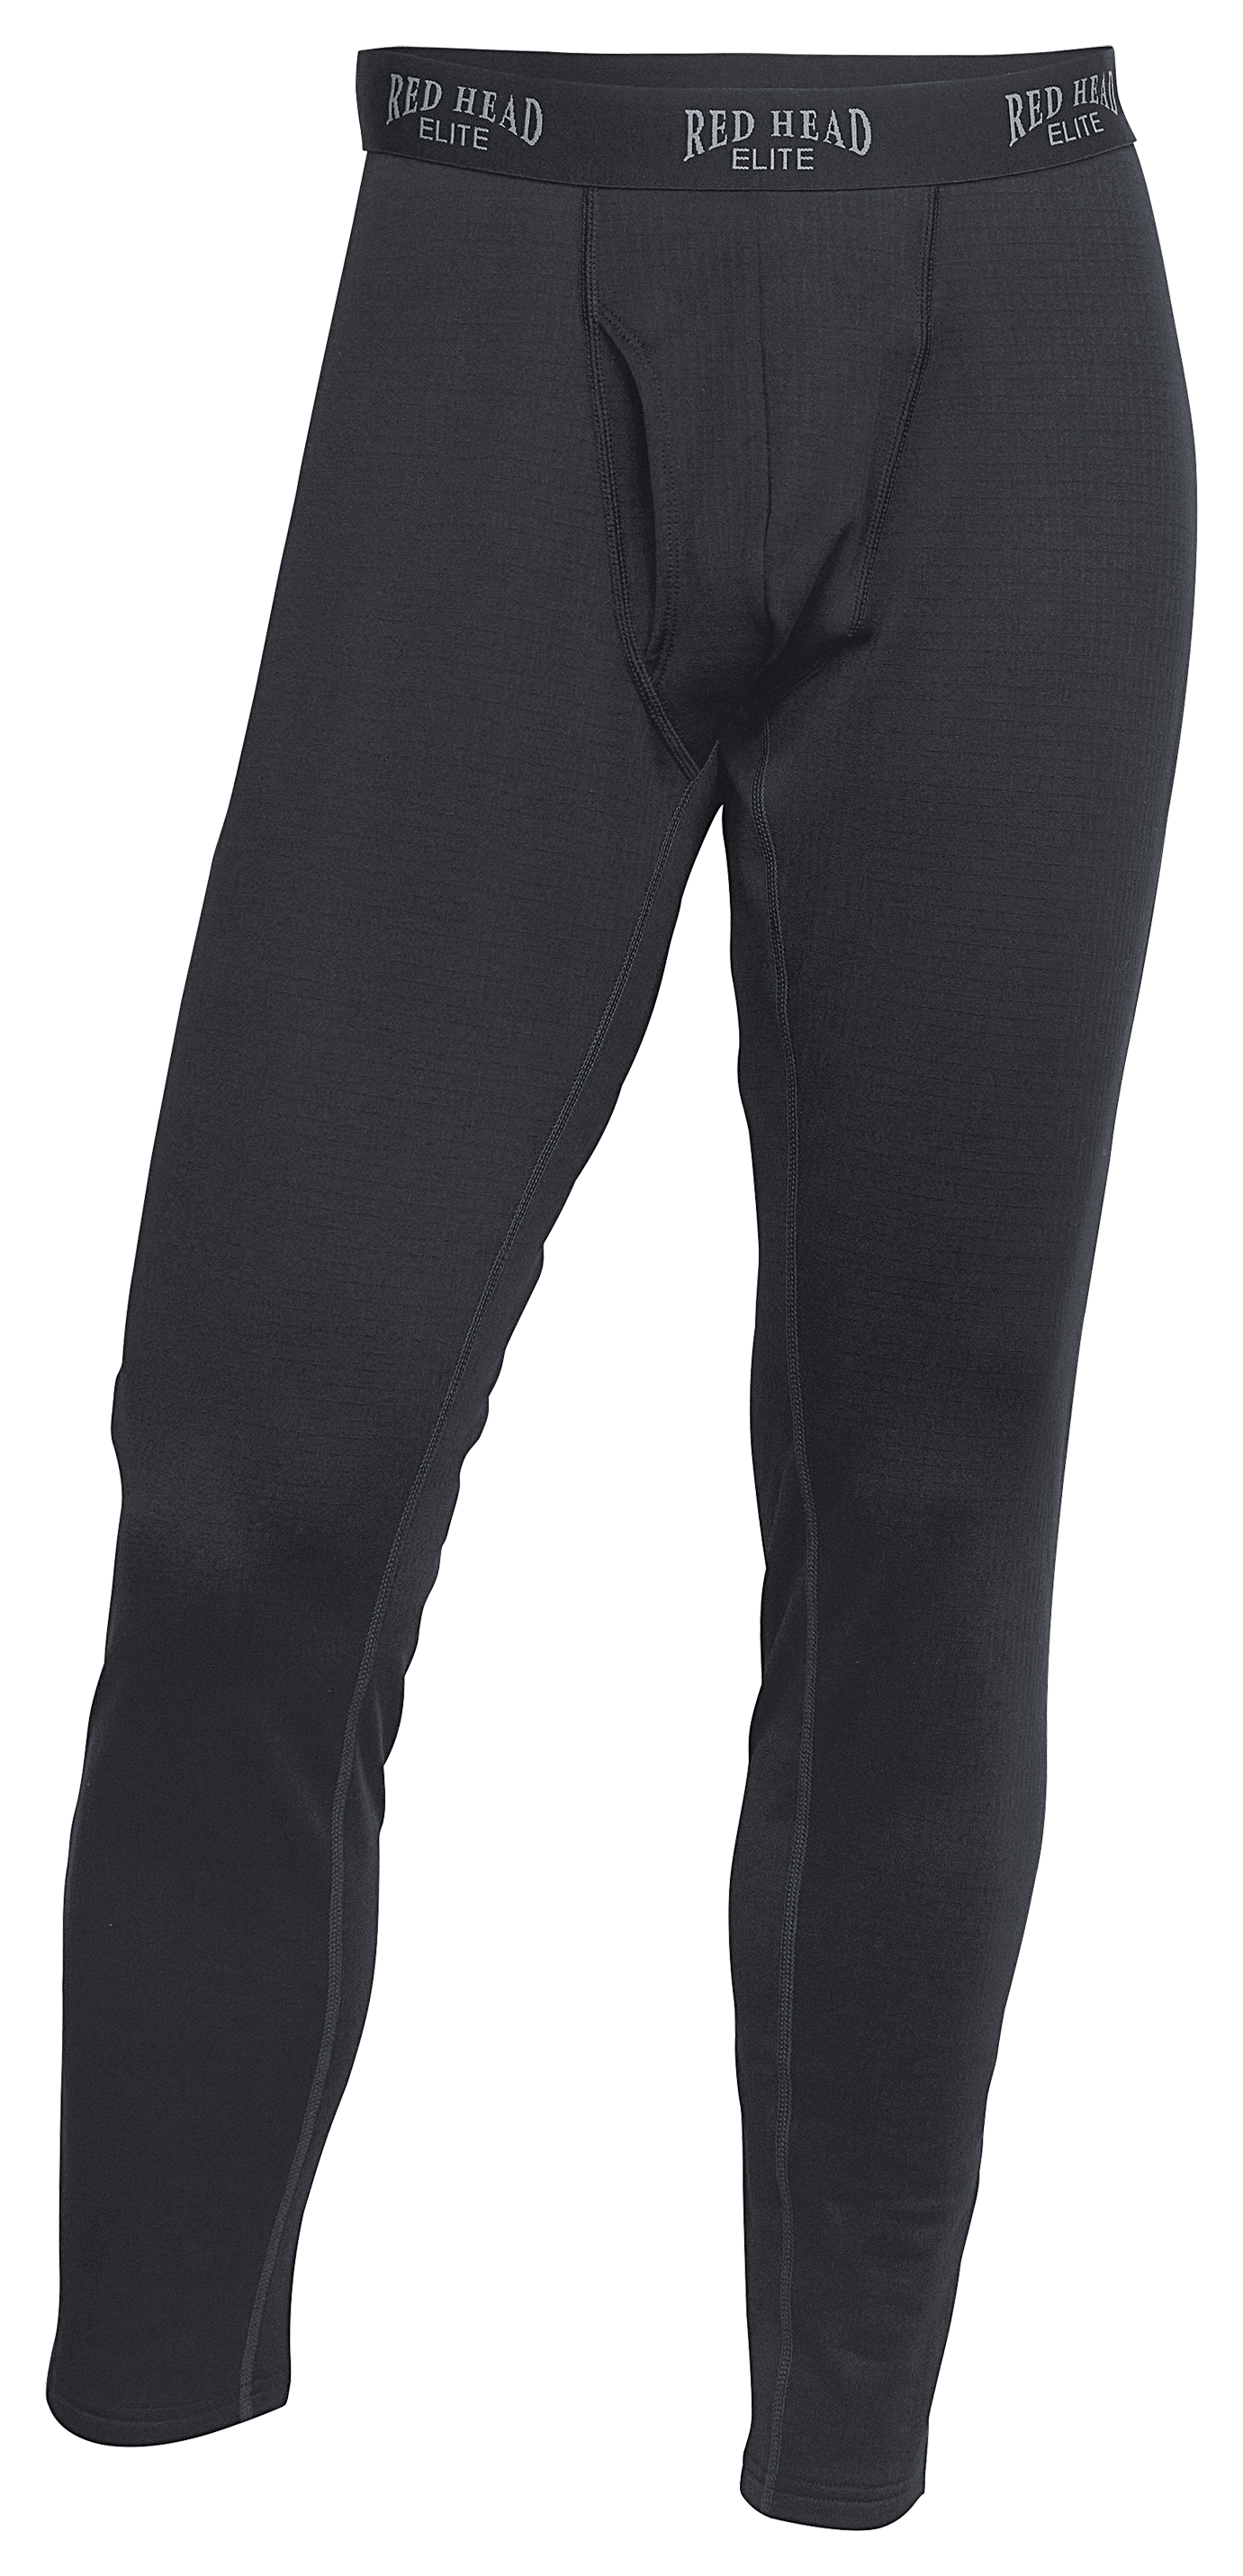 RedHead® Men's Elite Lightweight Base Layer Pants